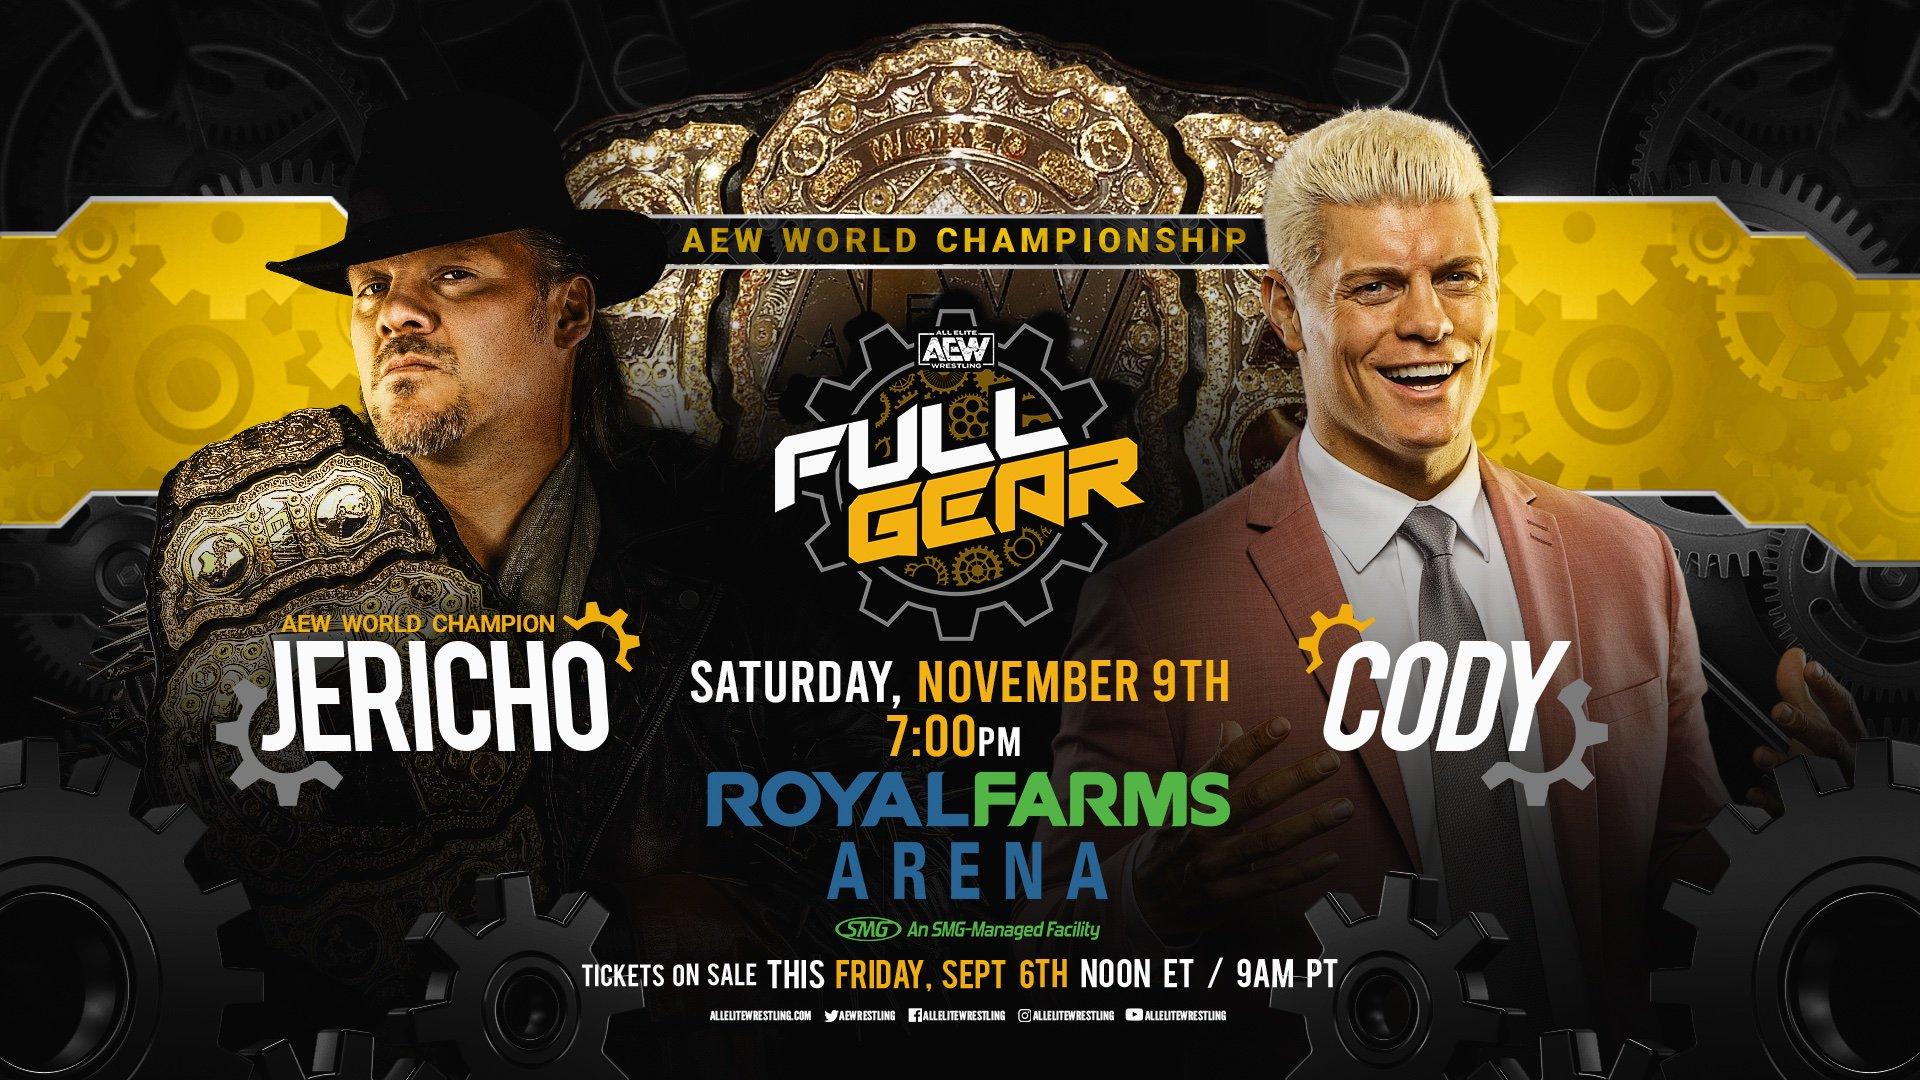 Chris Jericho vs. Cody World Championship match announced